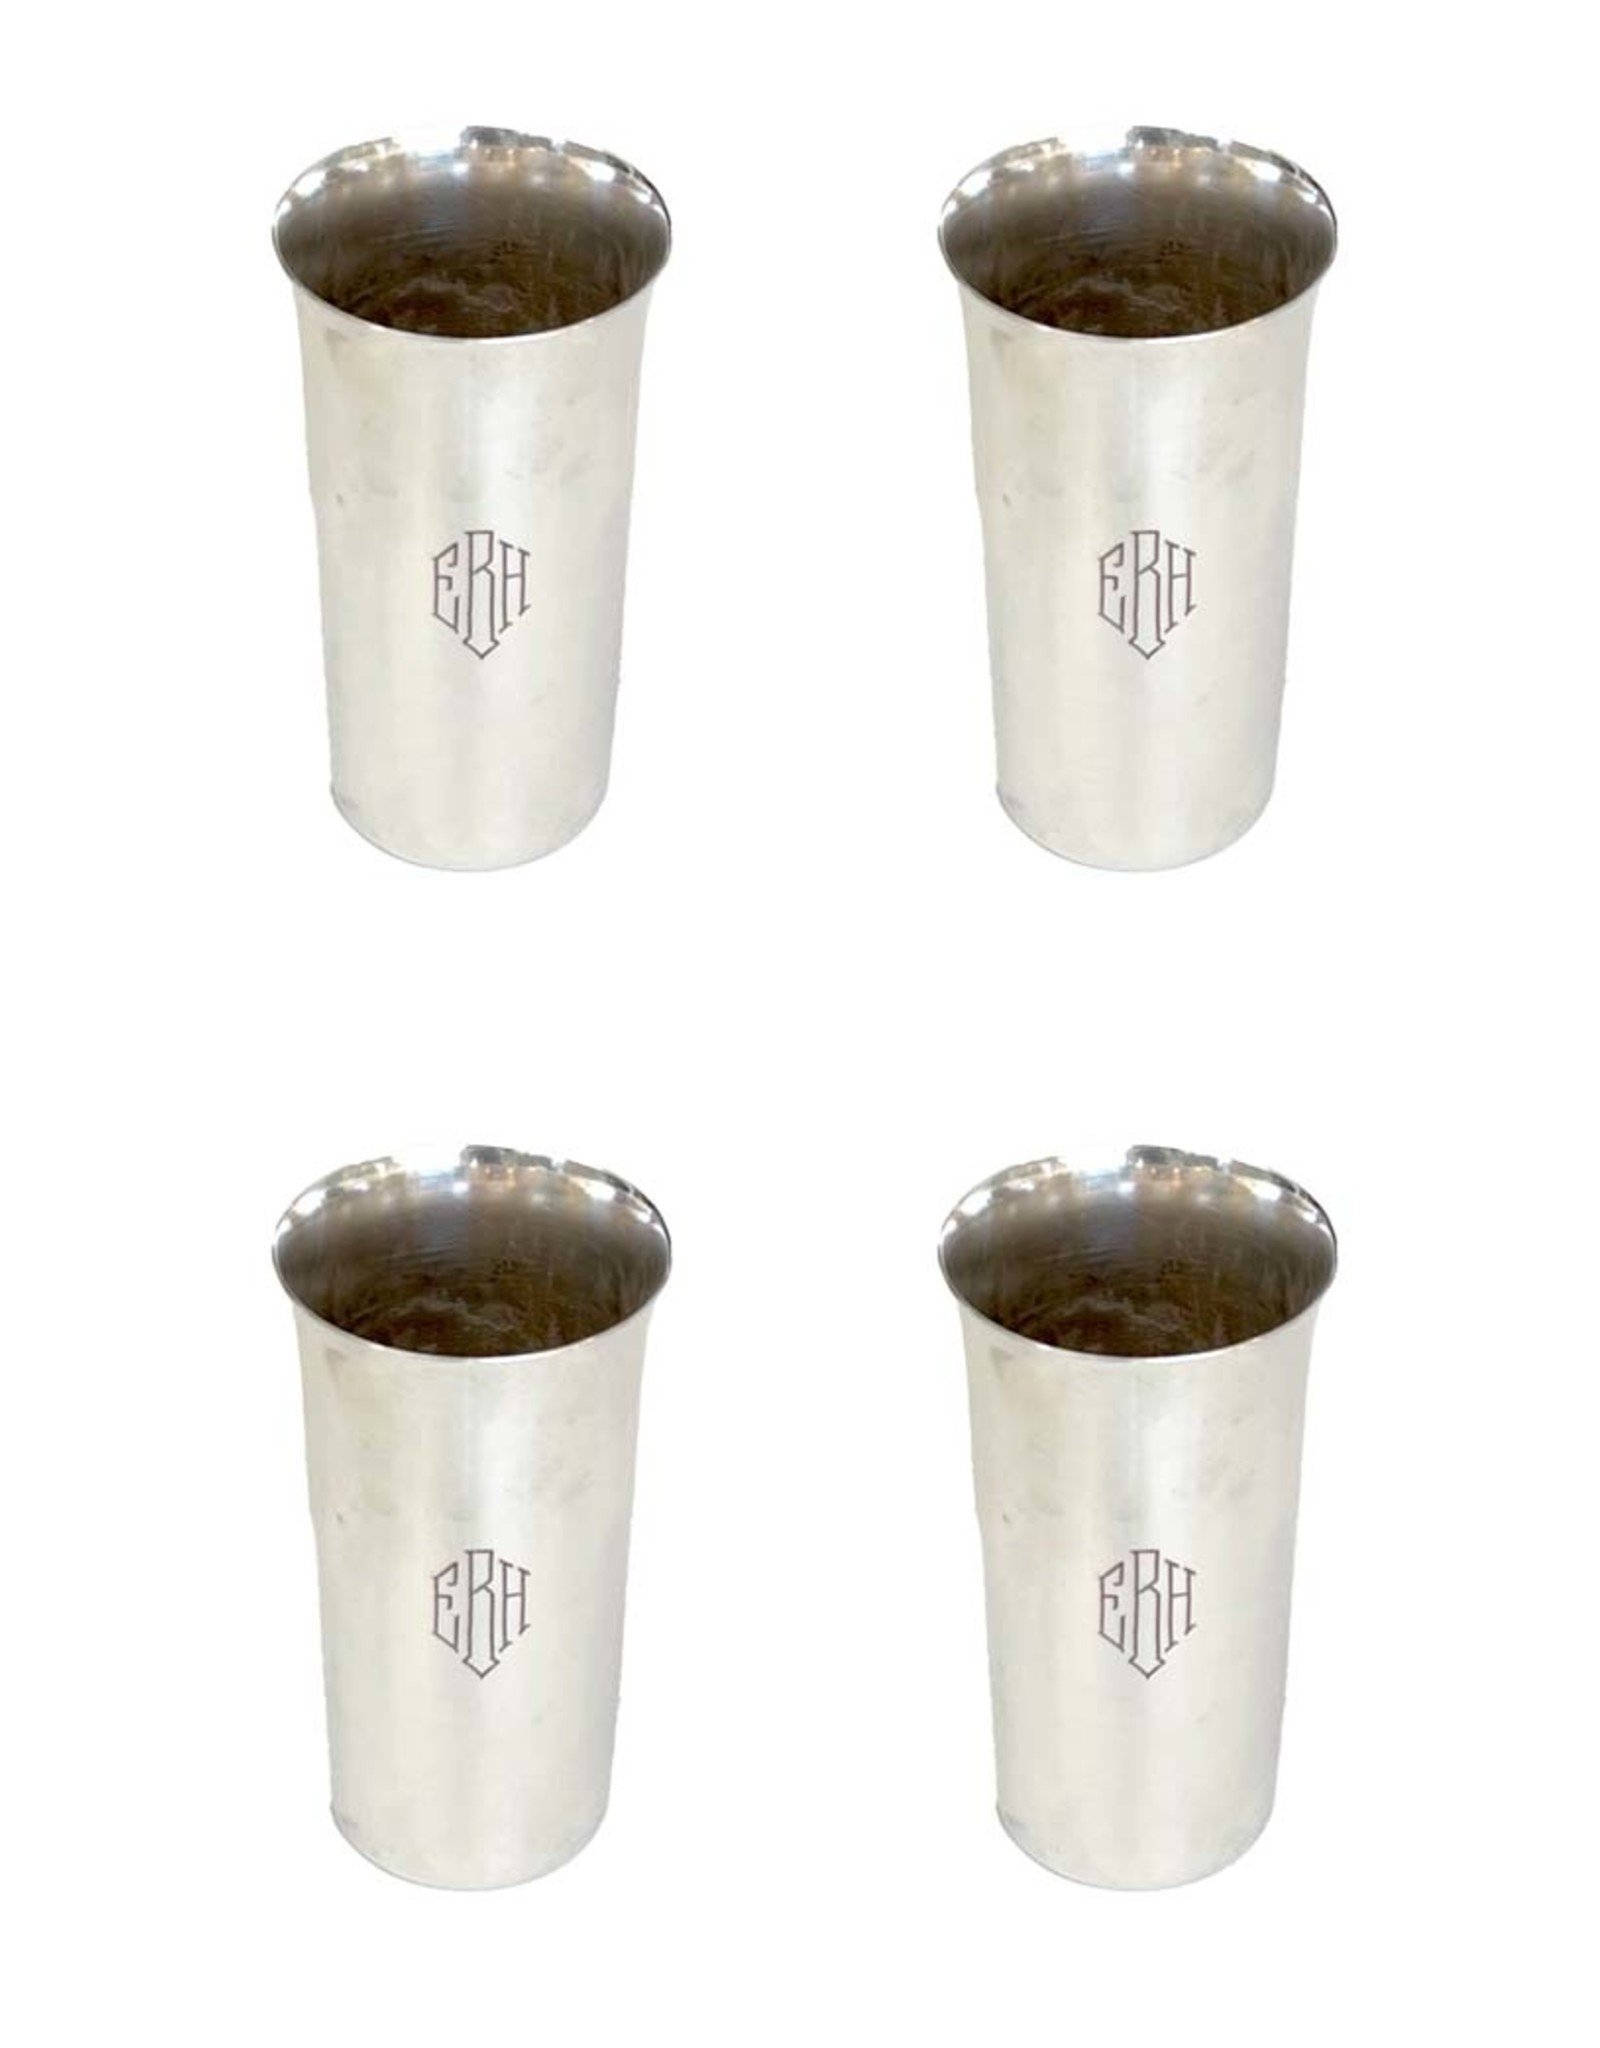 Vintage Silver monogramed cup set of 4